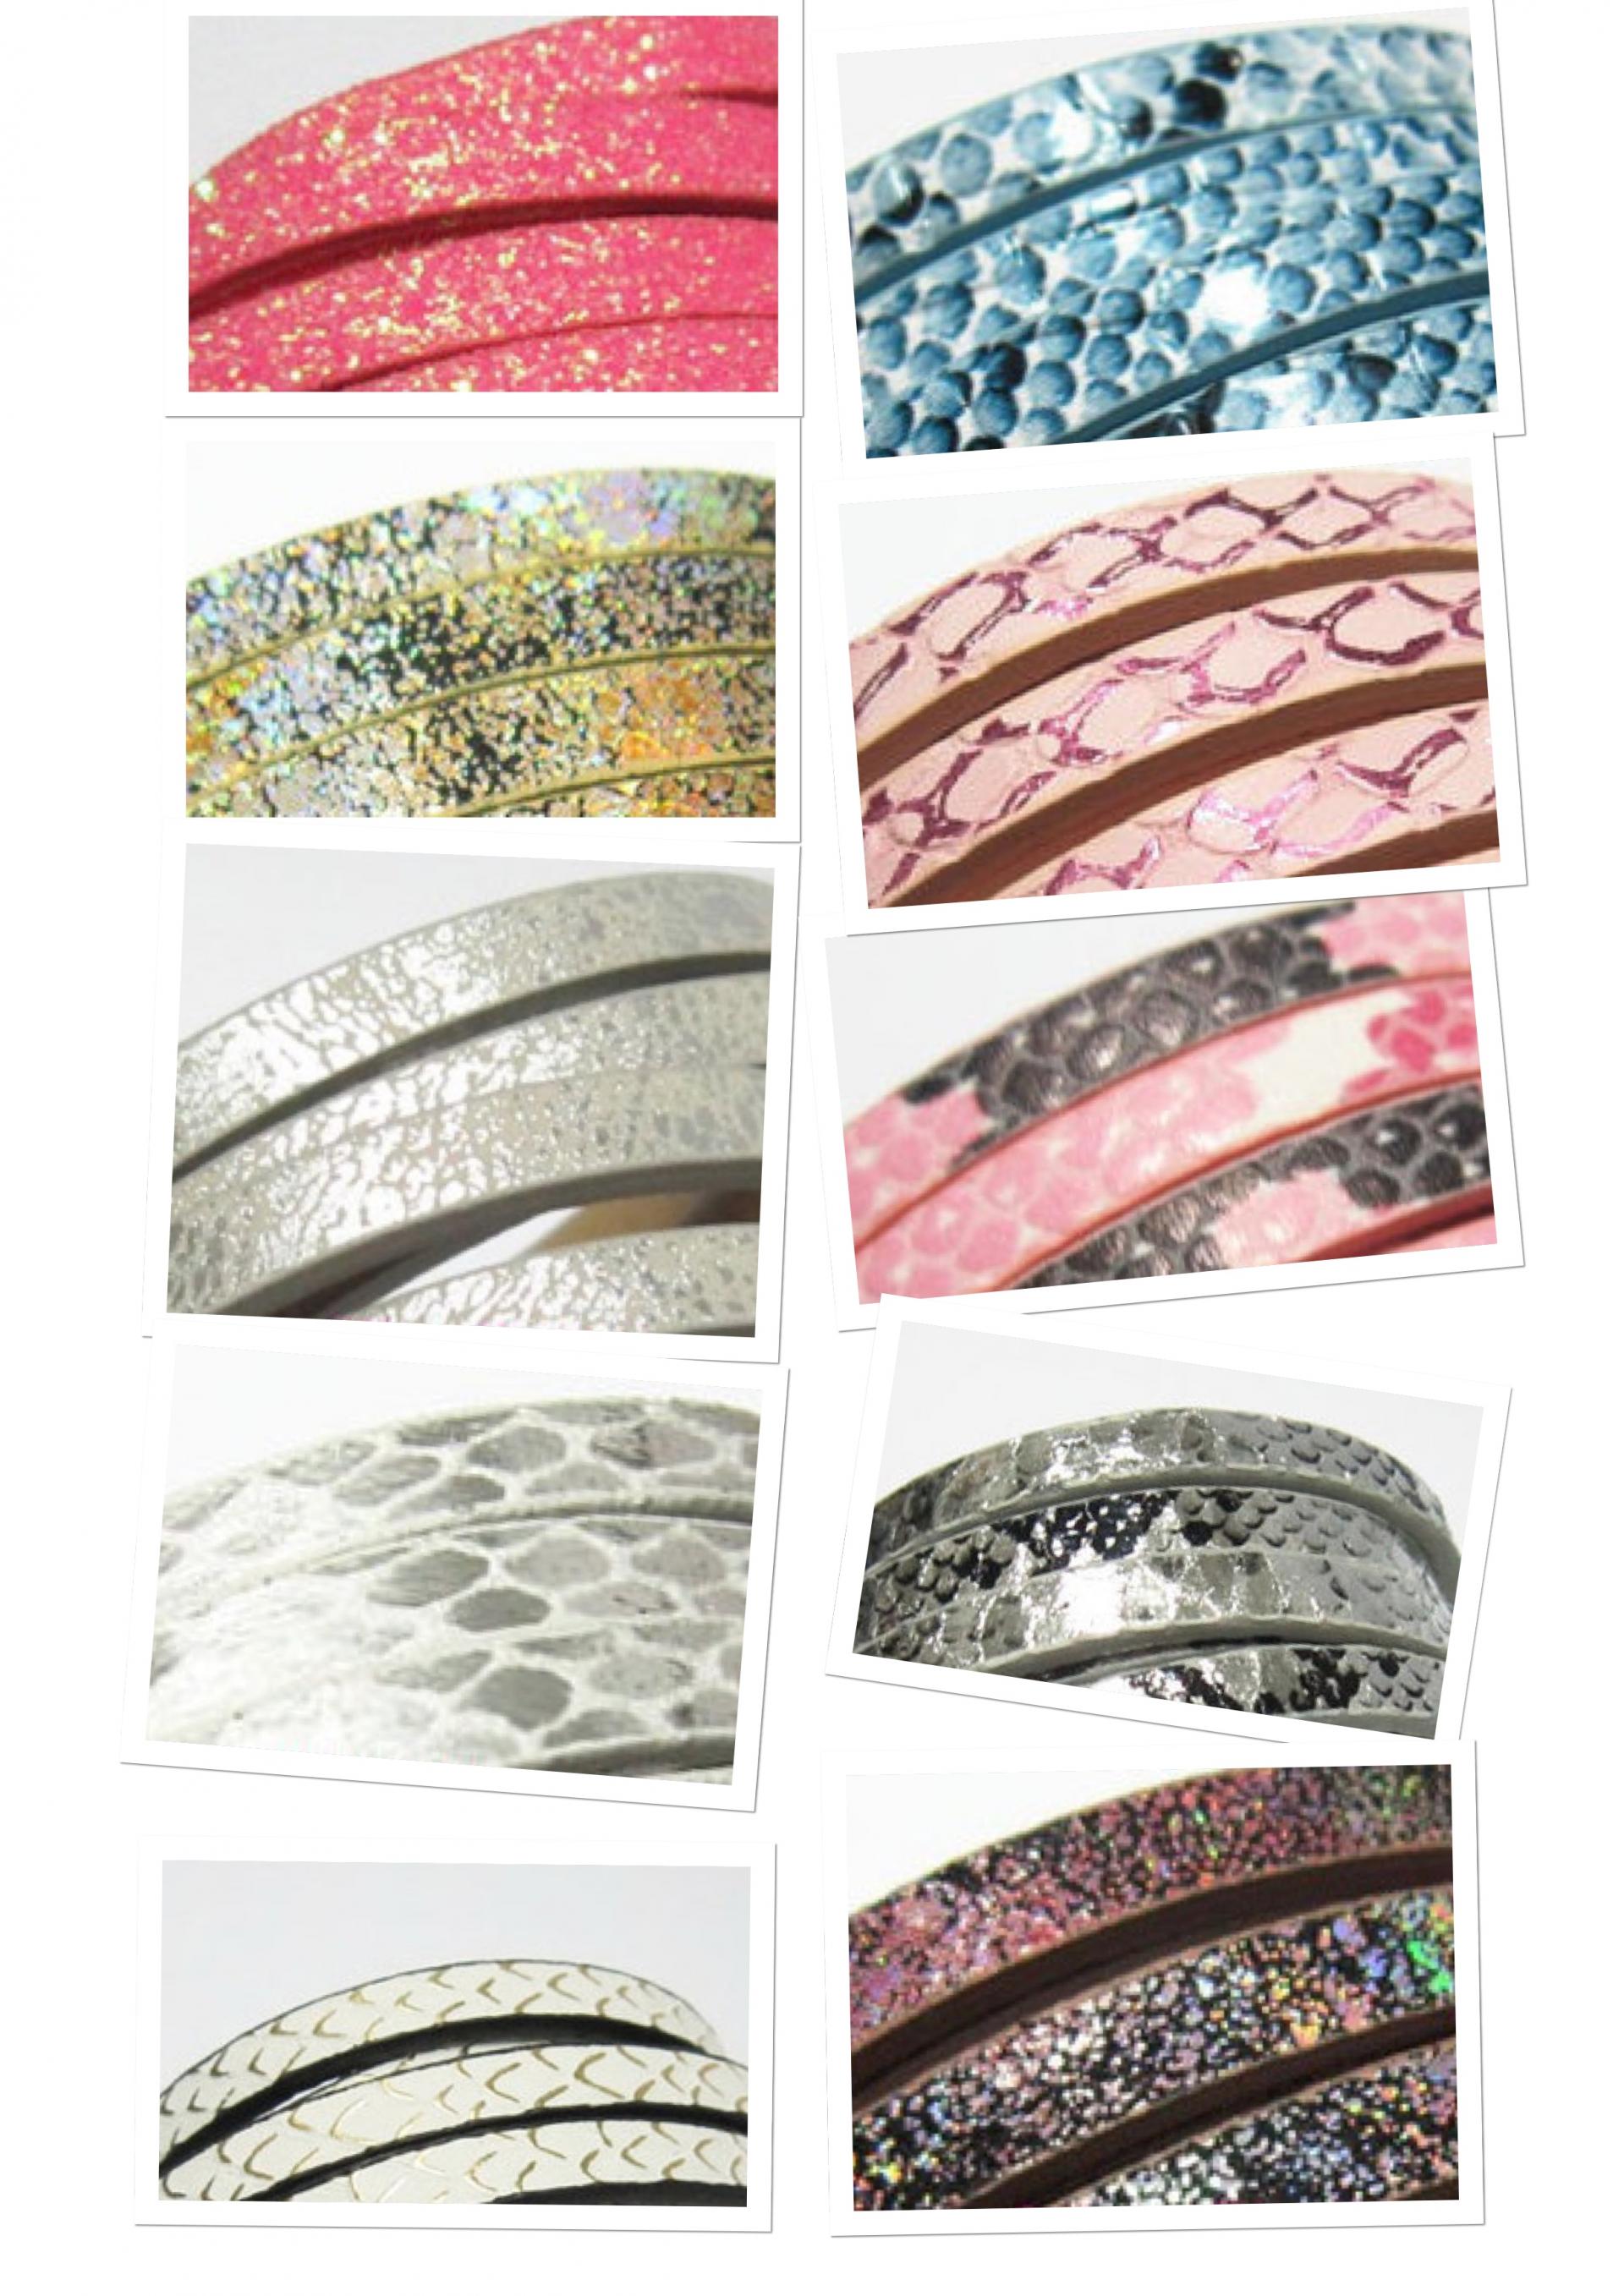 Wraparound Double Layer metallic leather Bracelets - Lots of Designs!